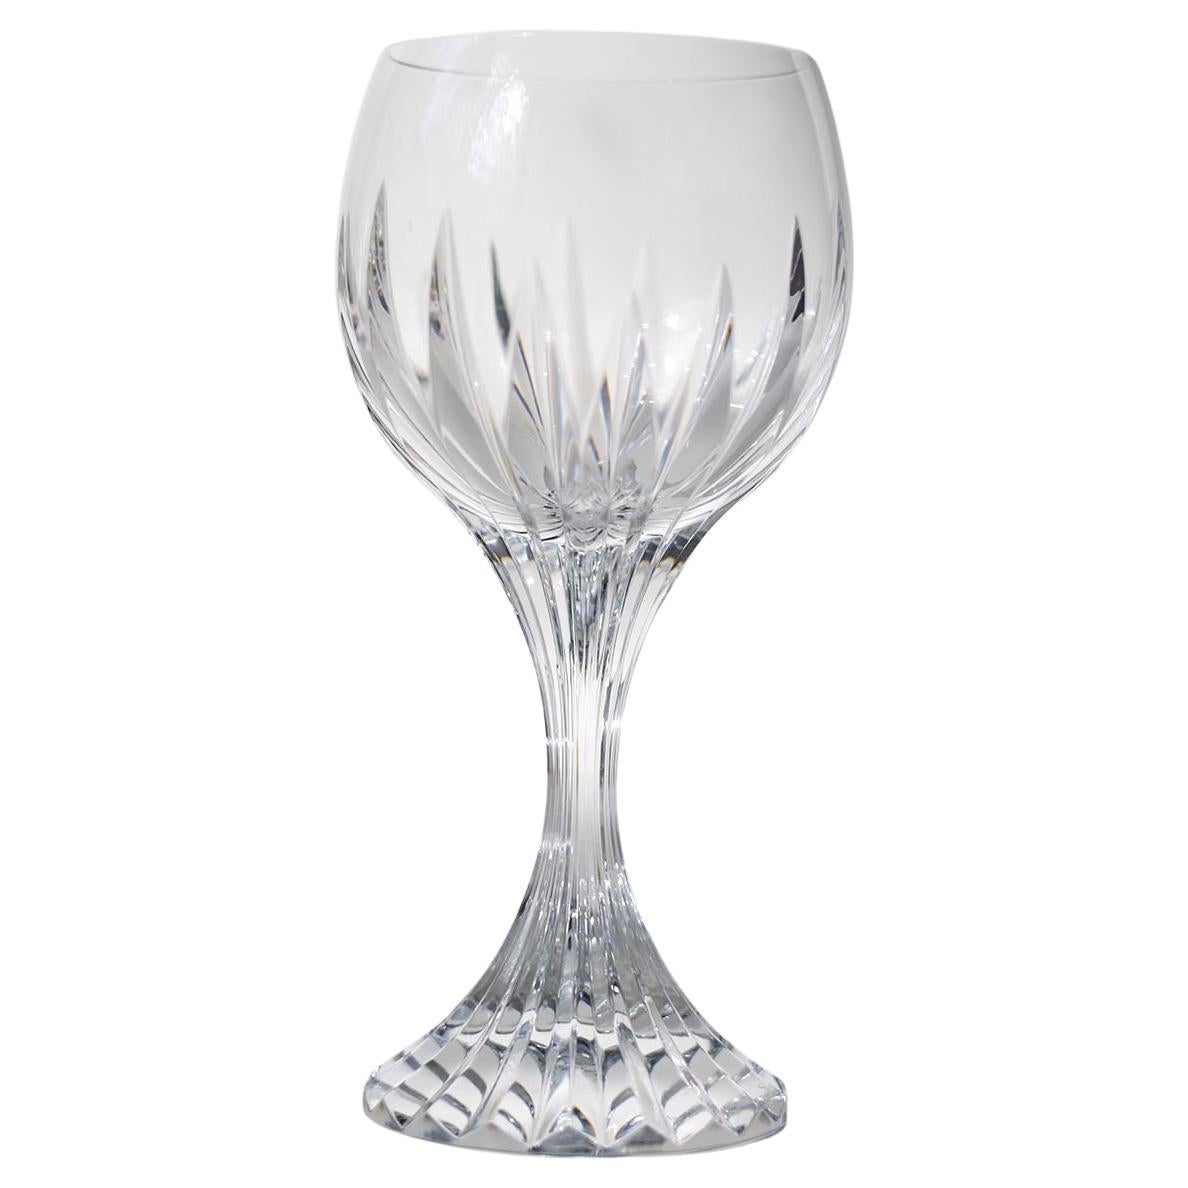 Baccarat "Massena" Set of 6 Crystal White Wine Glasses